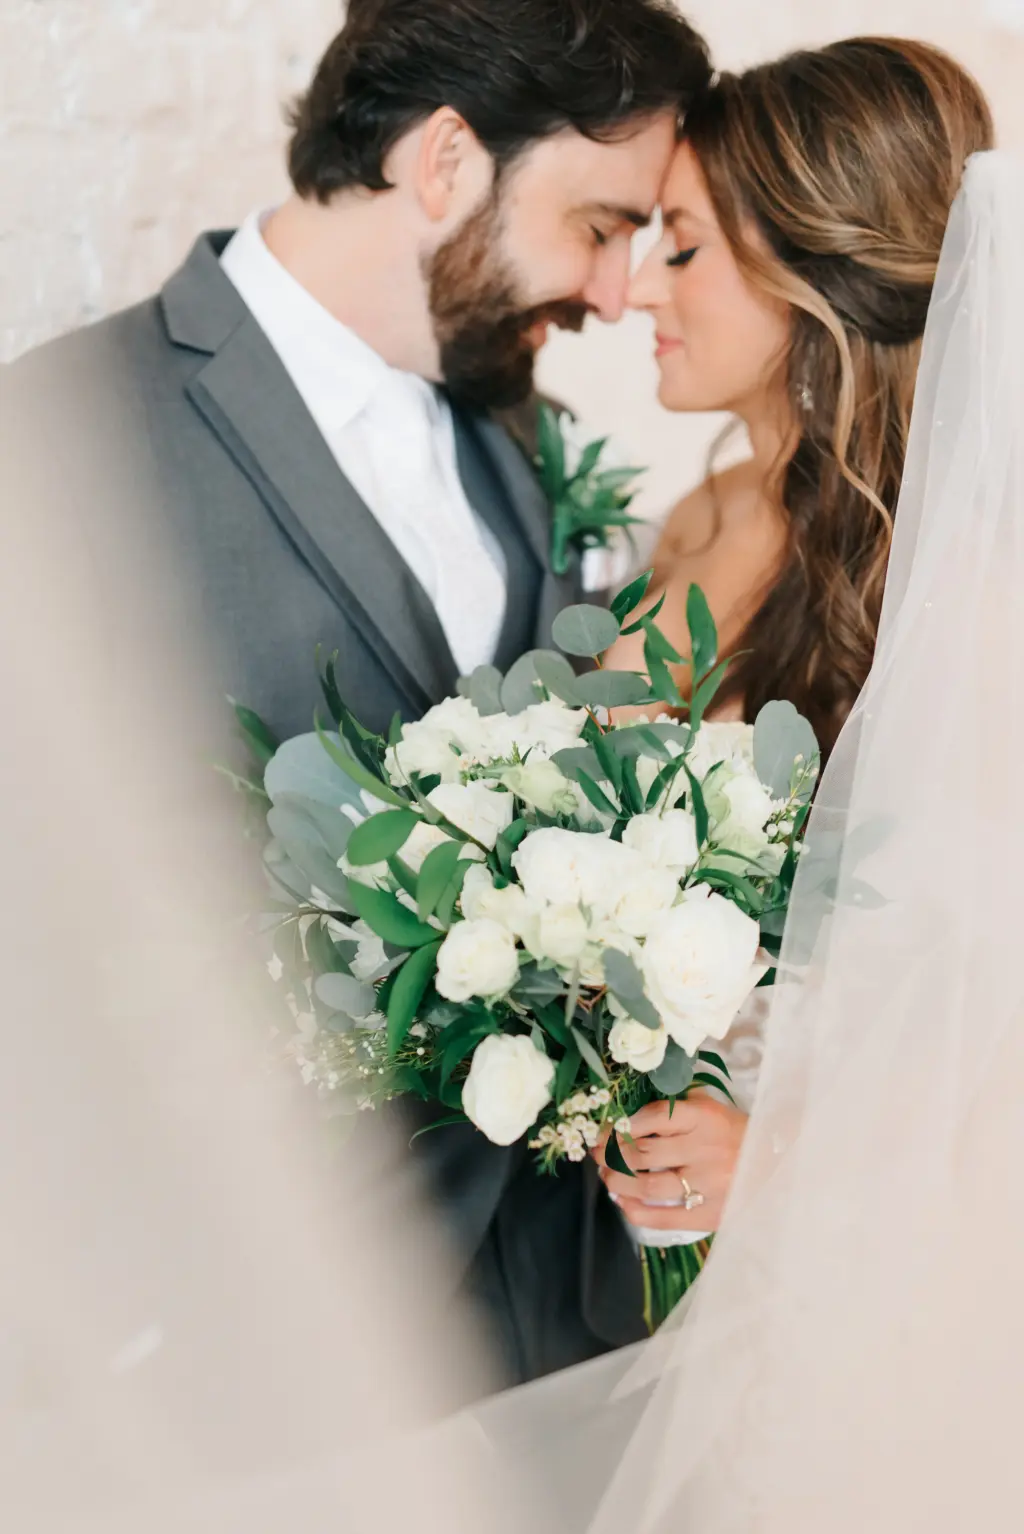 Bride and Groom Veil Wedding Portrait | Ybor City Venue Hotel Haya | Tampa Wedding Planner Eventfull Weddings